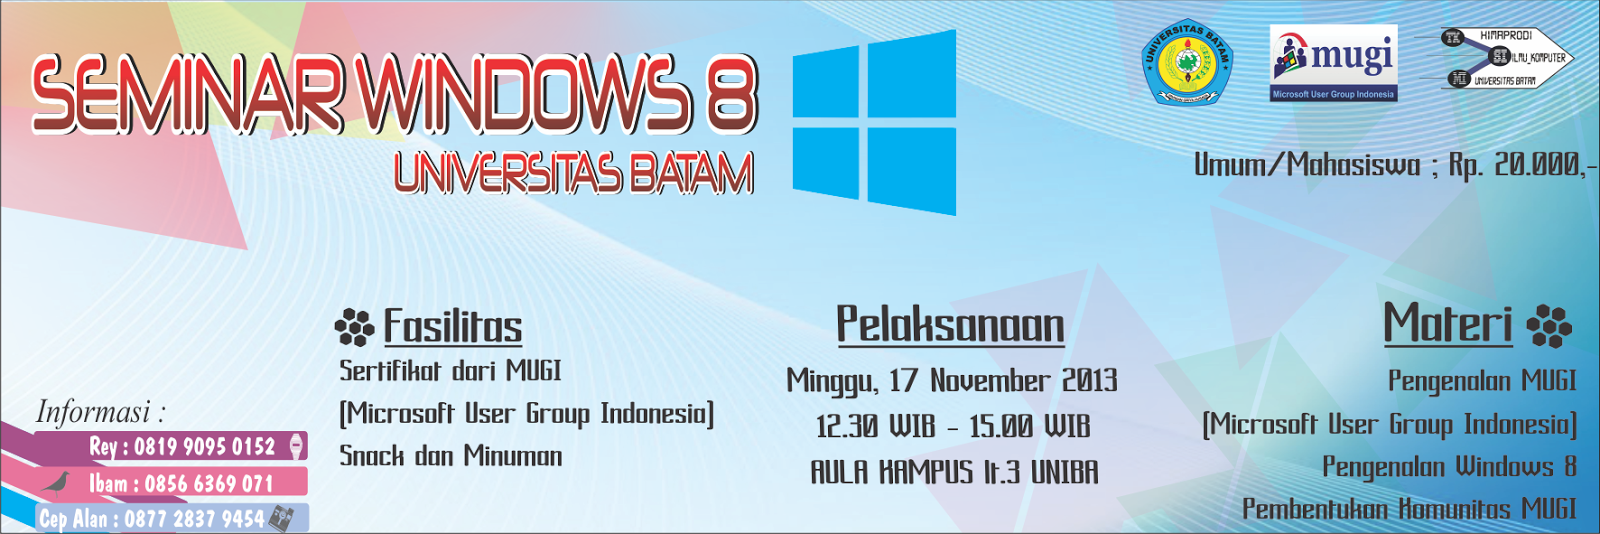  Seminar Windows 8 Universitas Batam EveryDay